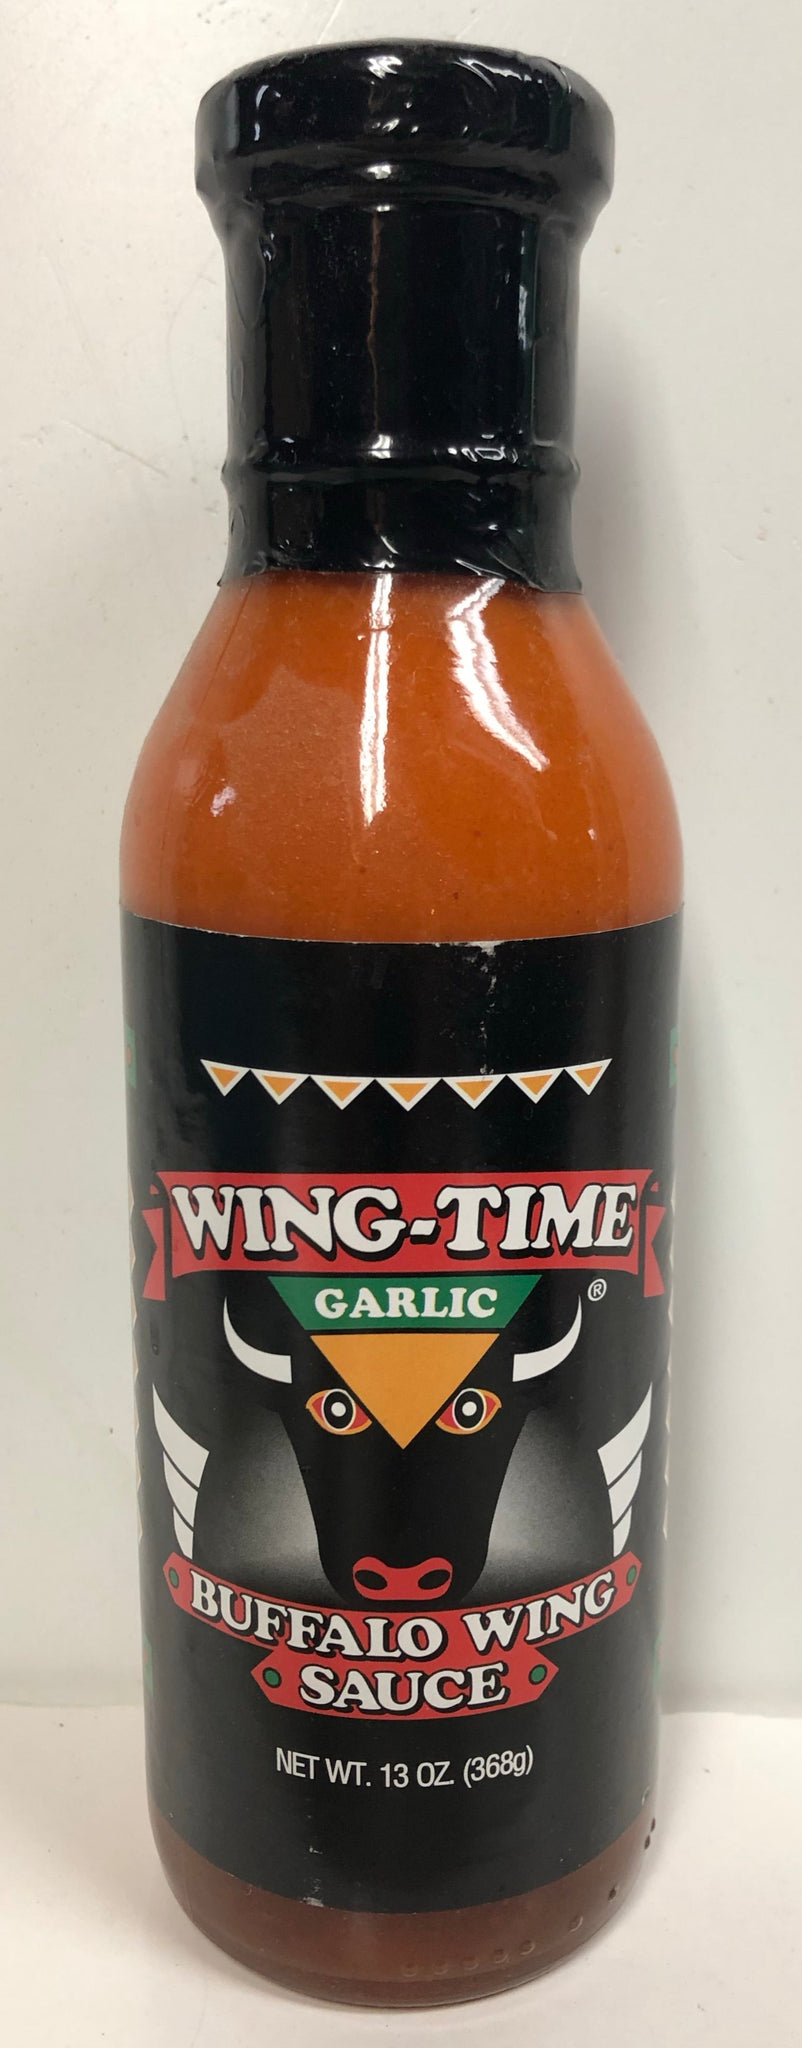 Wing-Time Garlic Buffalo Wing Sauce